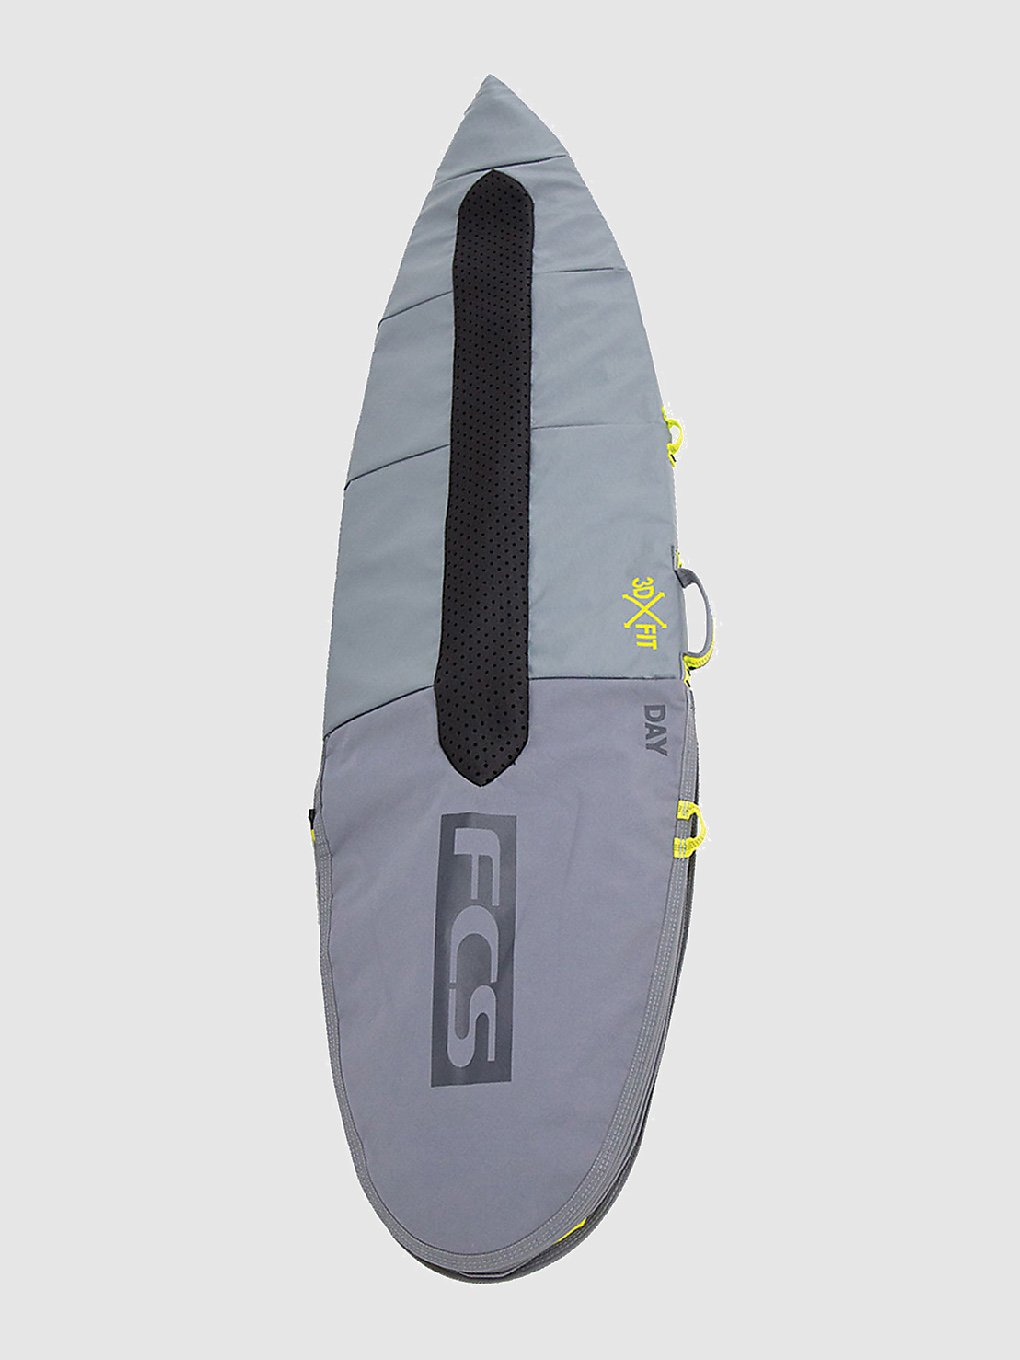 FCS Day All Purpose 6'7 Surfboard-Tasche grey